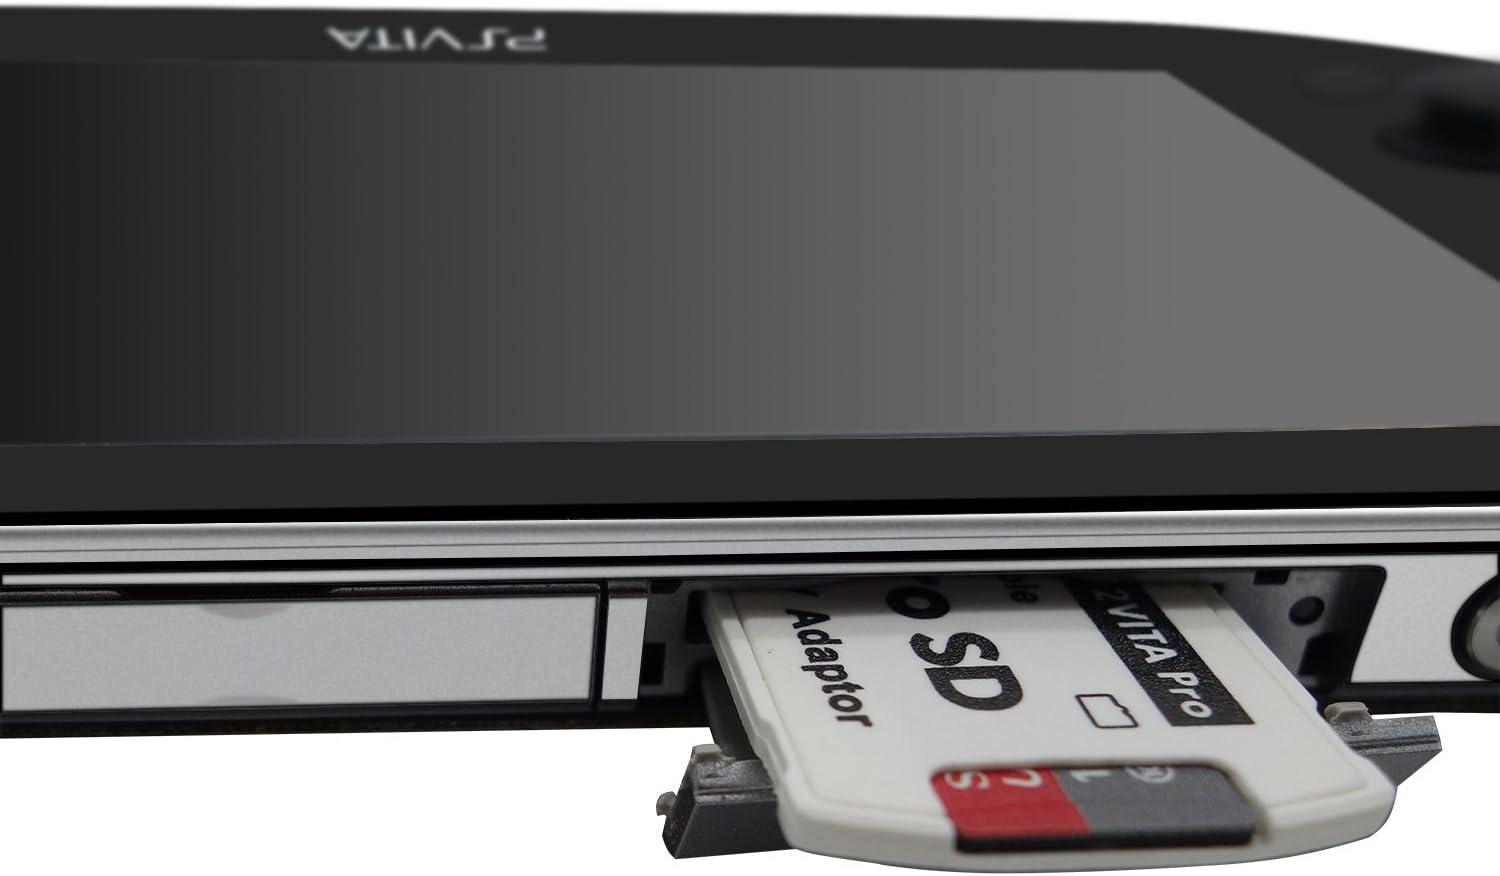  Version 2.0 SD2Vita Memory Card Adapter High Speed